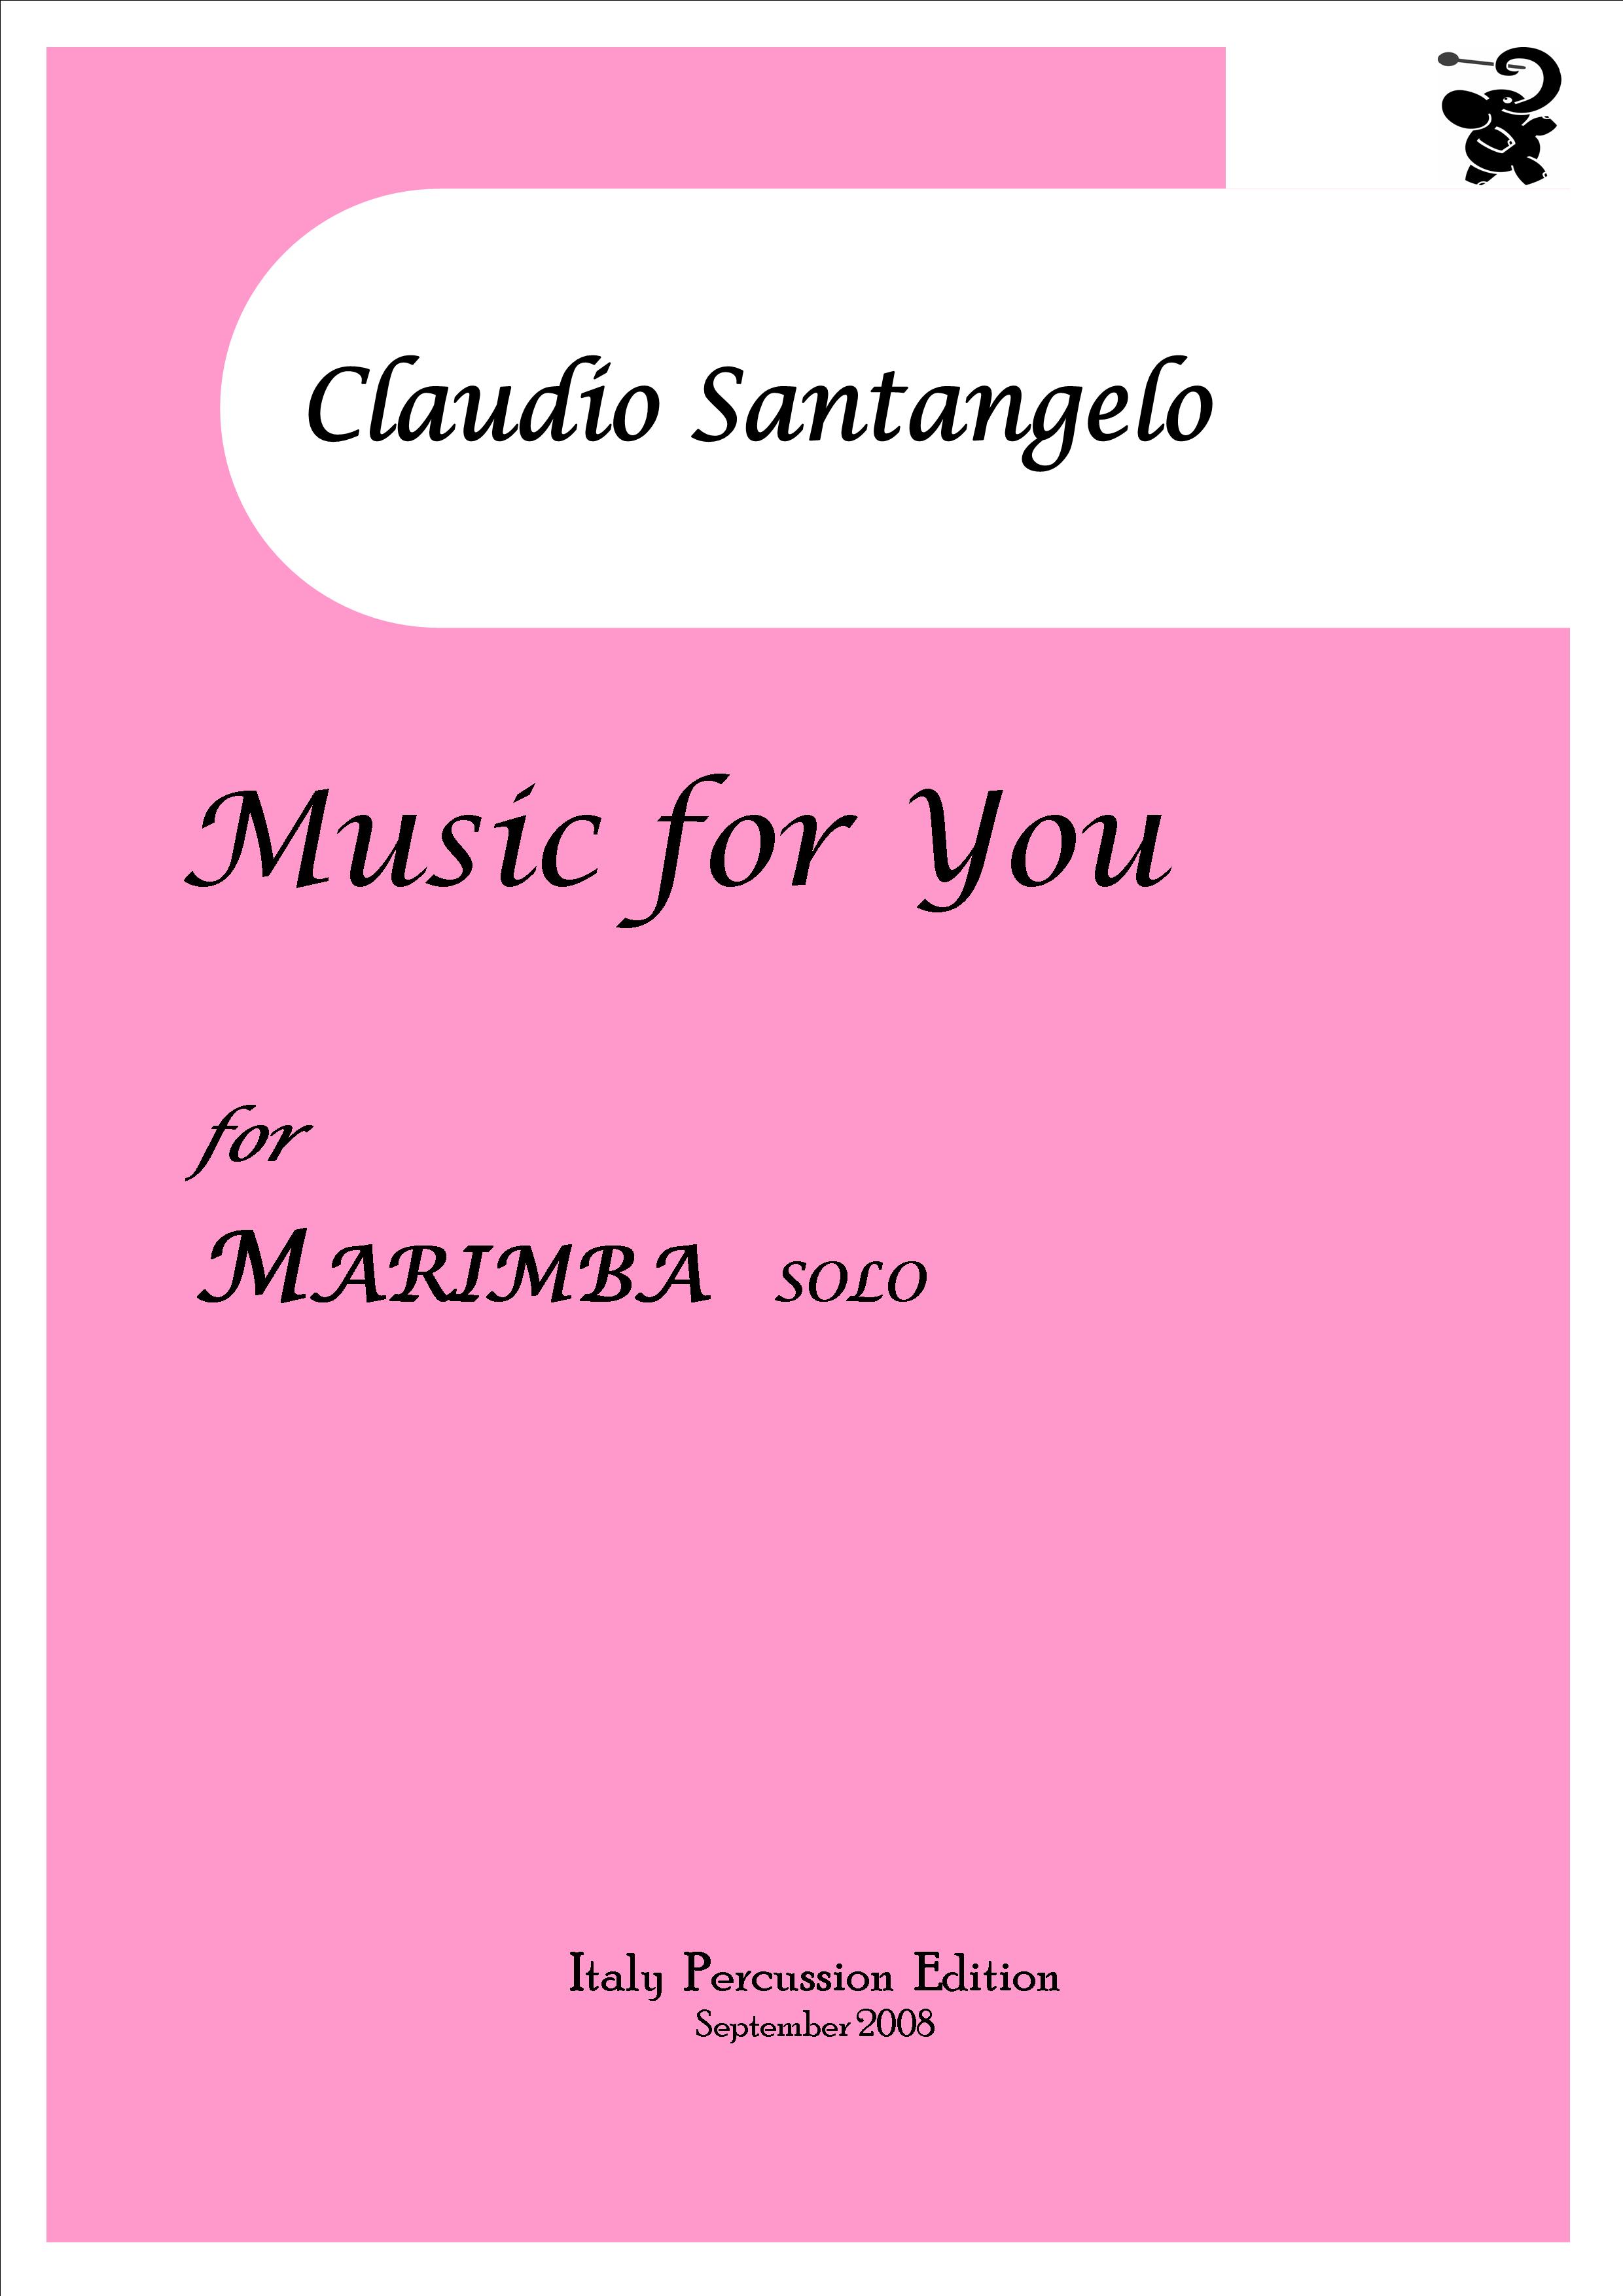 Music for You, Claudio Santangelo